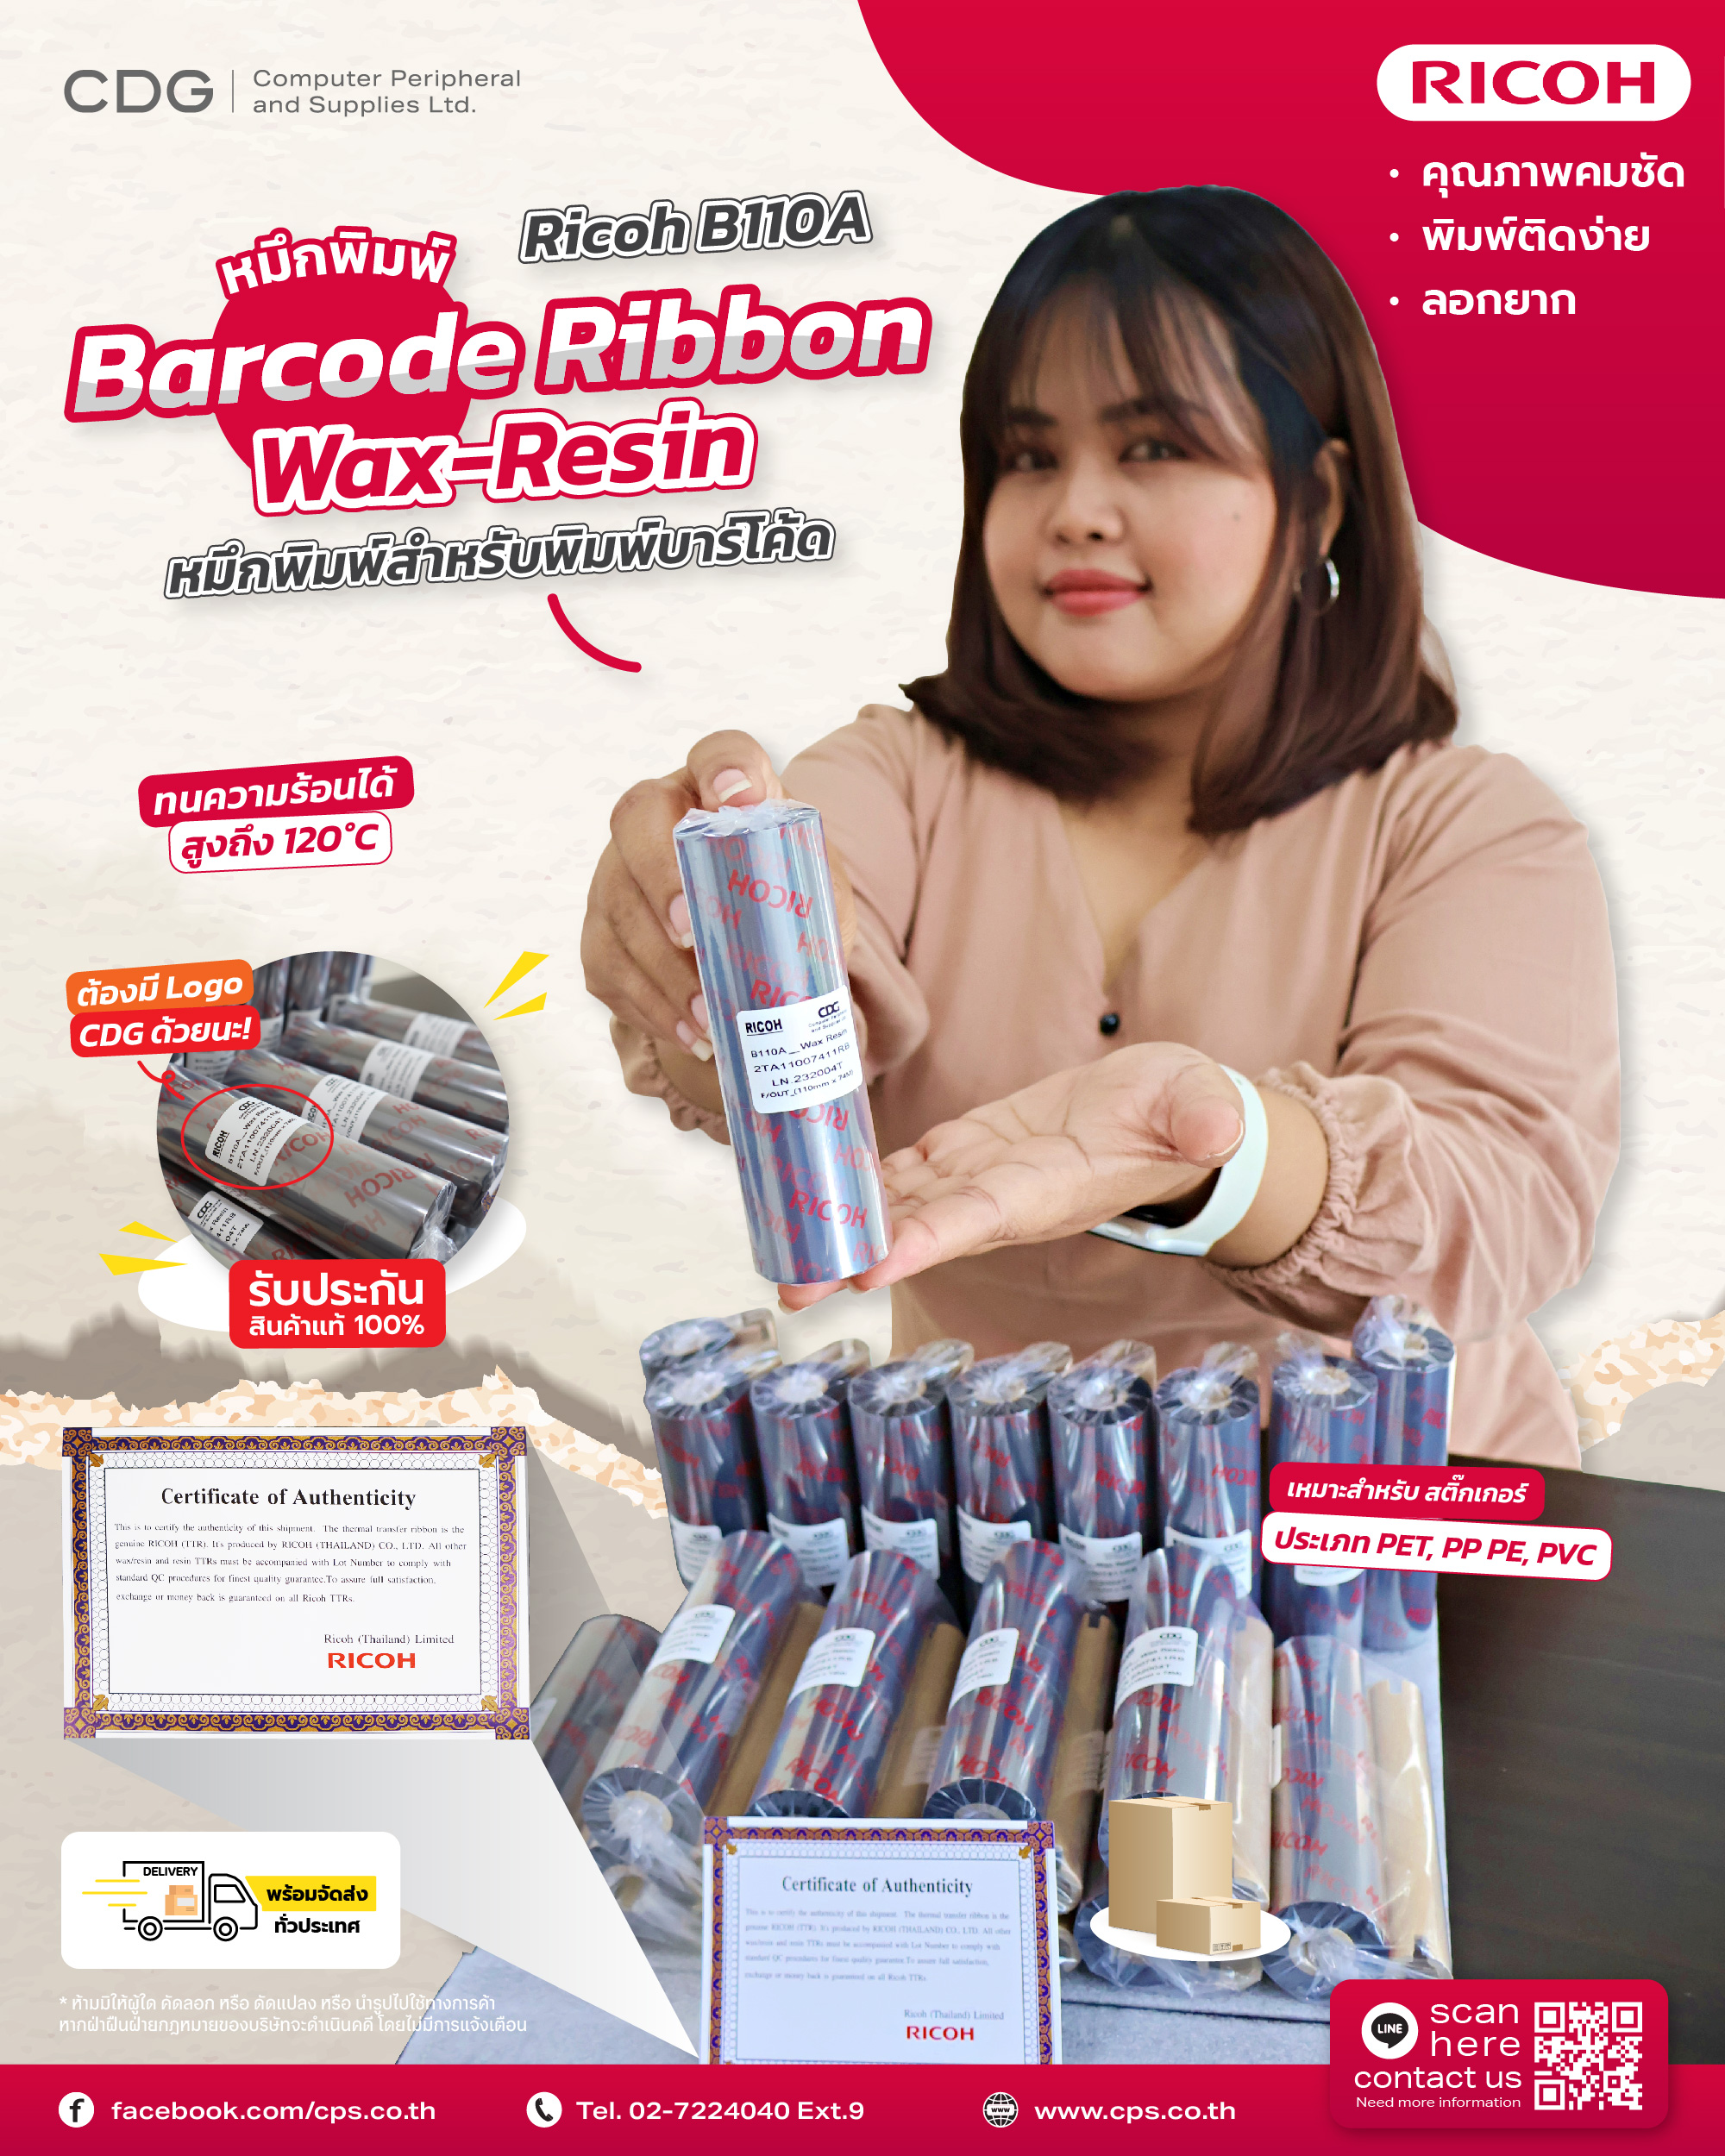 Ribbon Ricoh Wax-Resin B110A